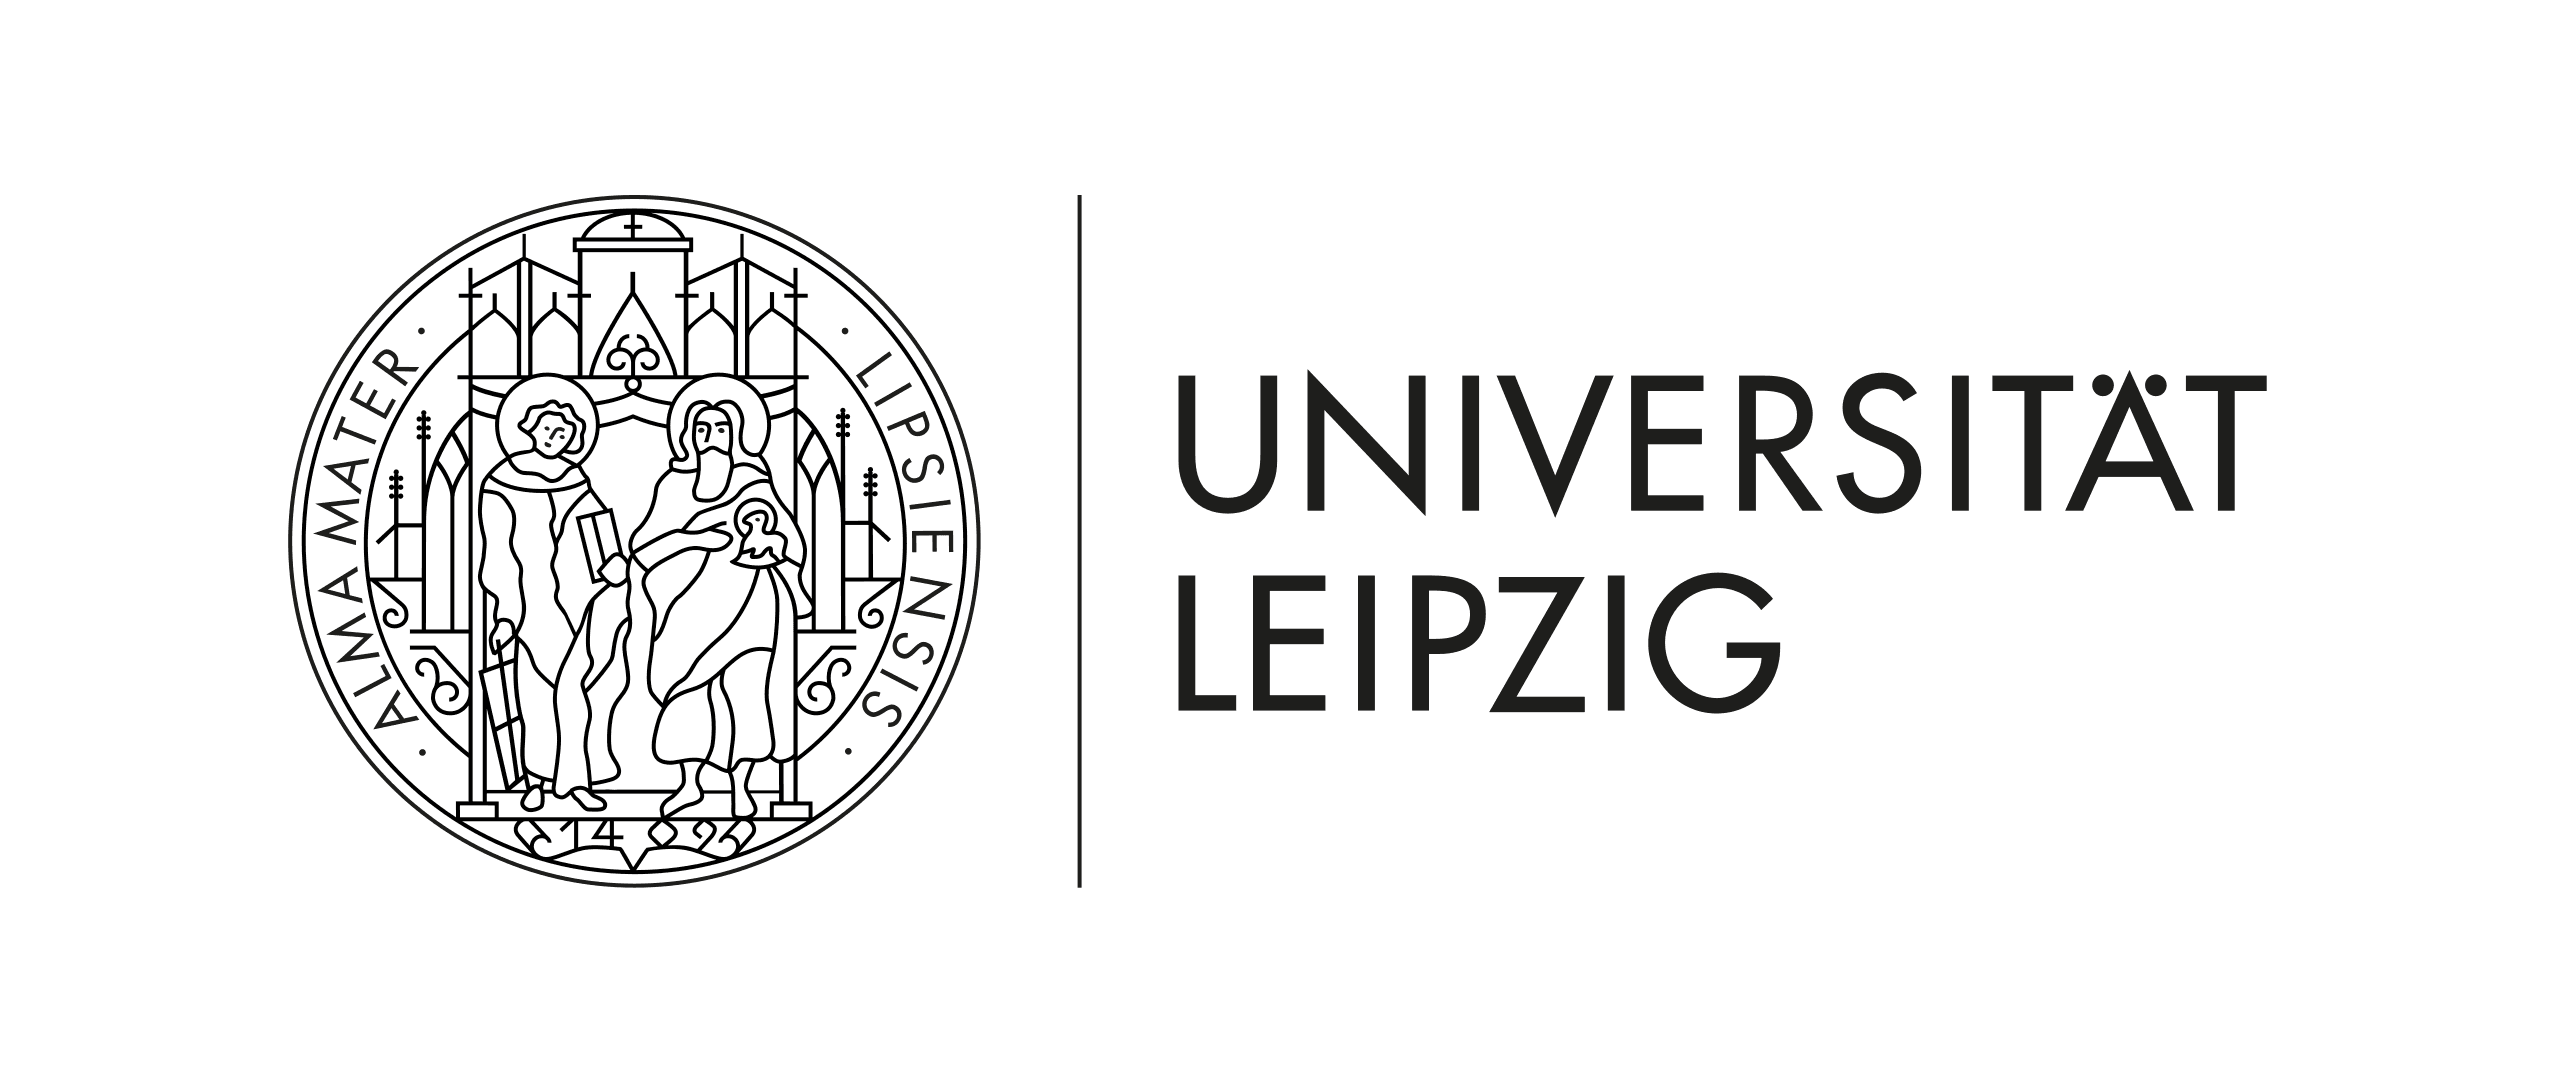 leipzig-university-60841c997b-cover-picture